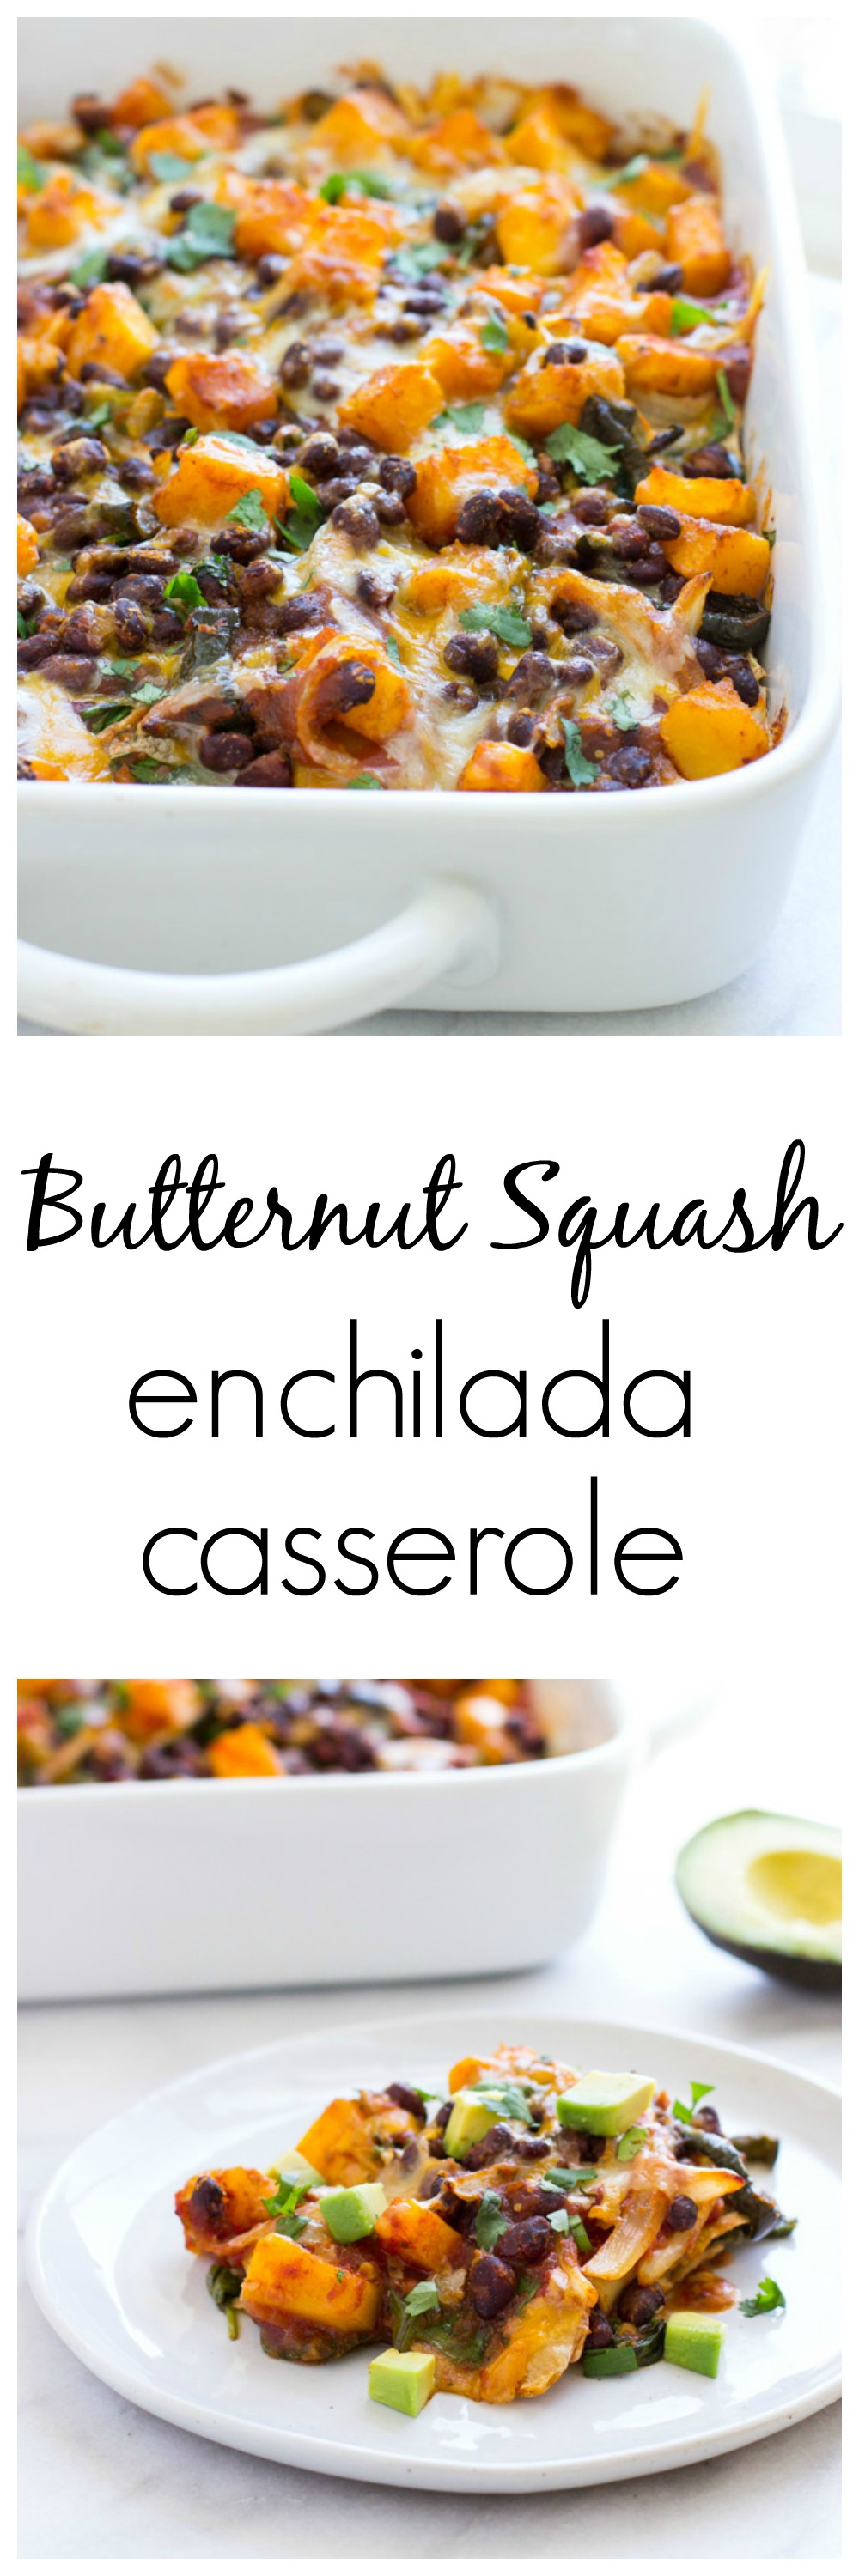 Butternut Squash Enchilada Casserole- a healthy vegetarian meal that everyone will love!